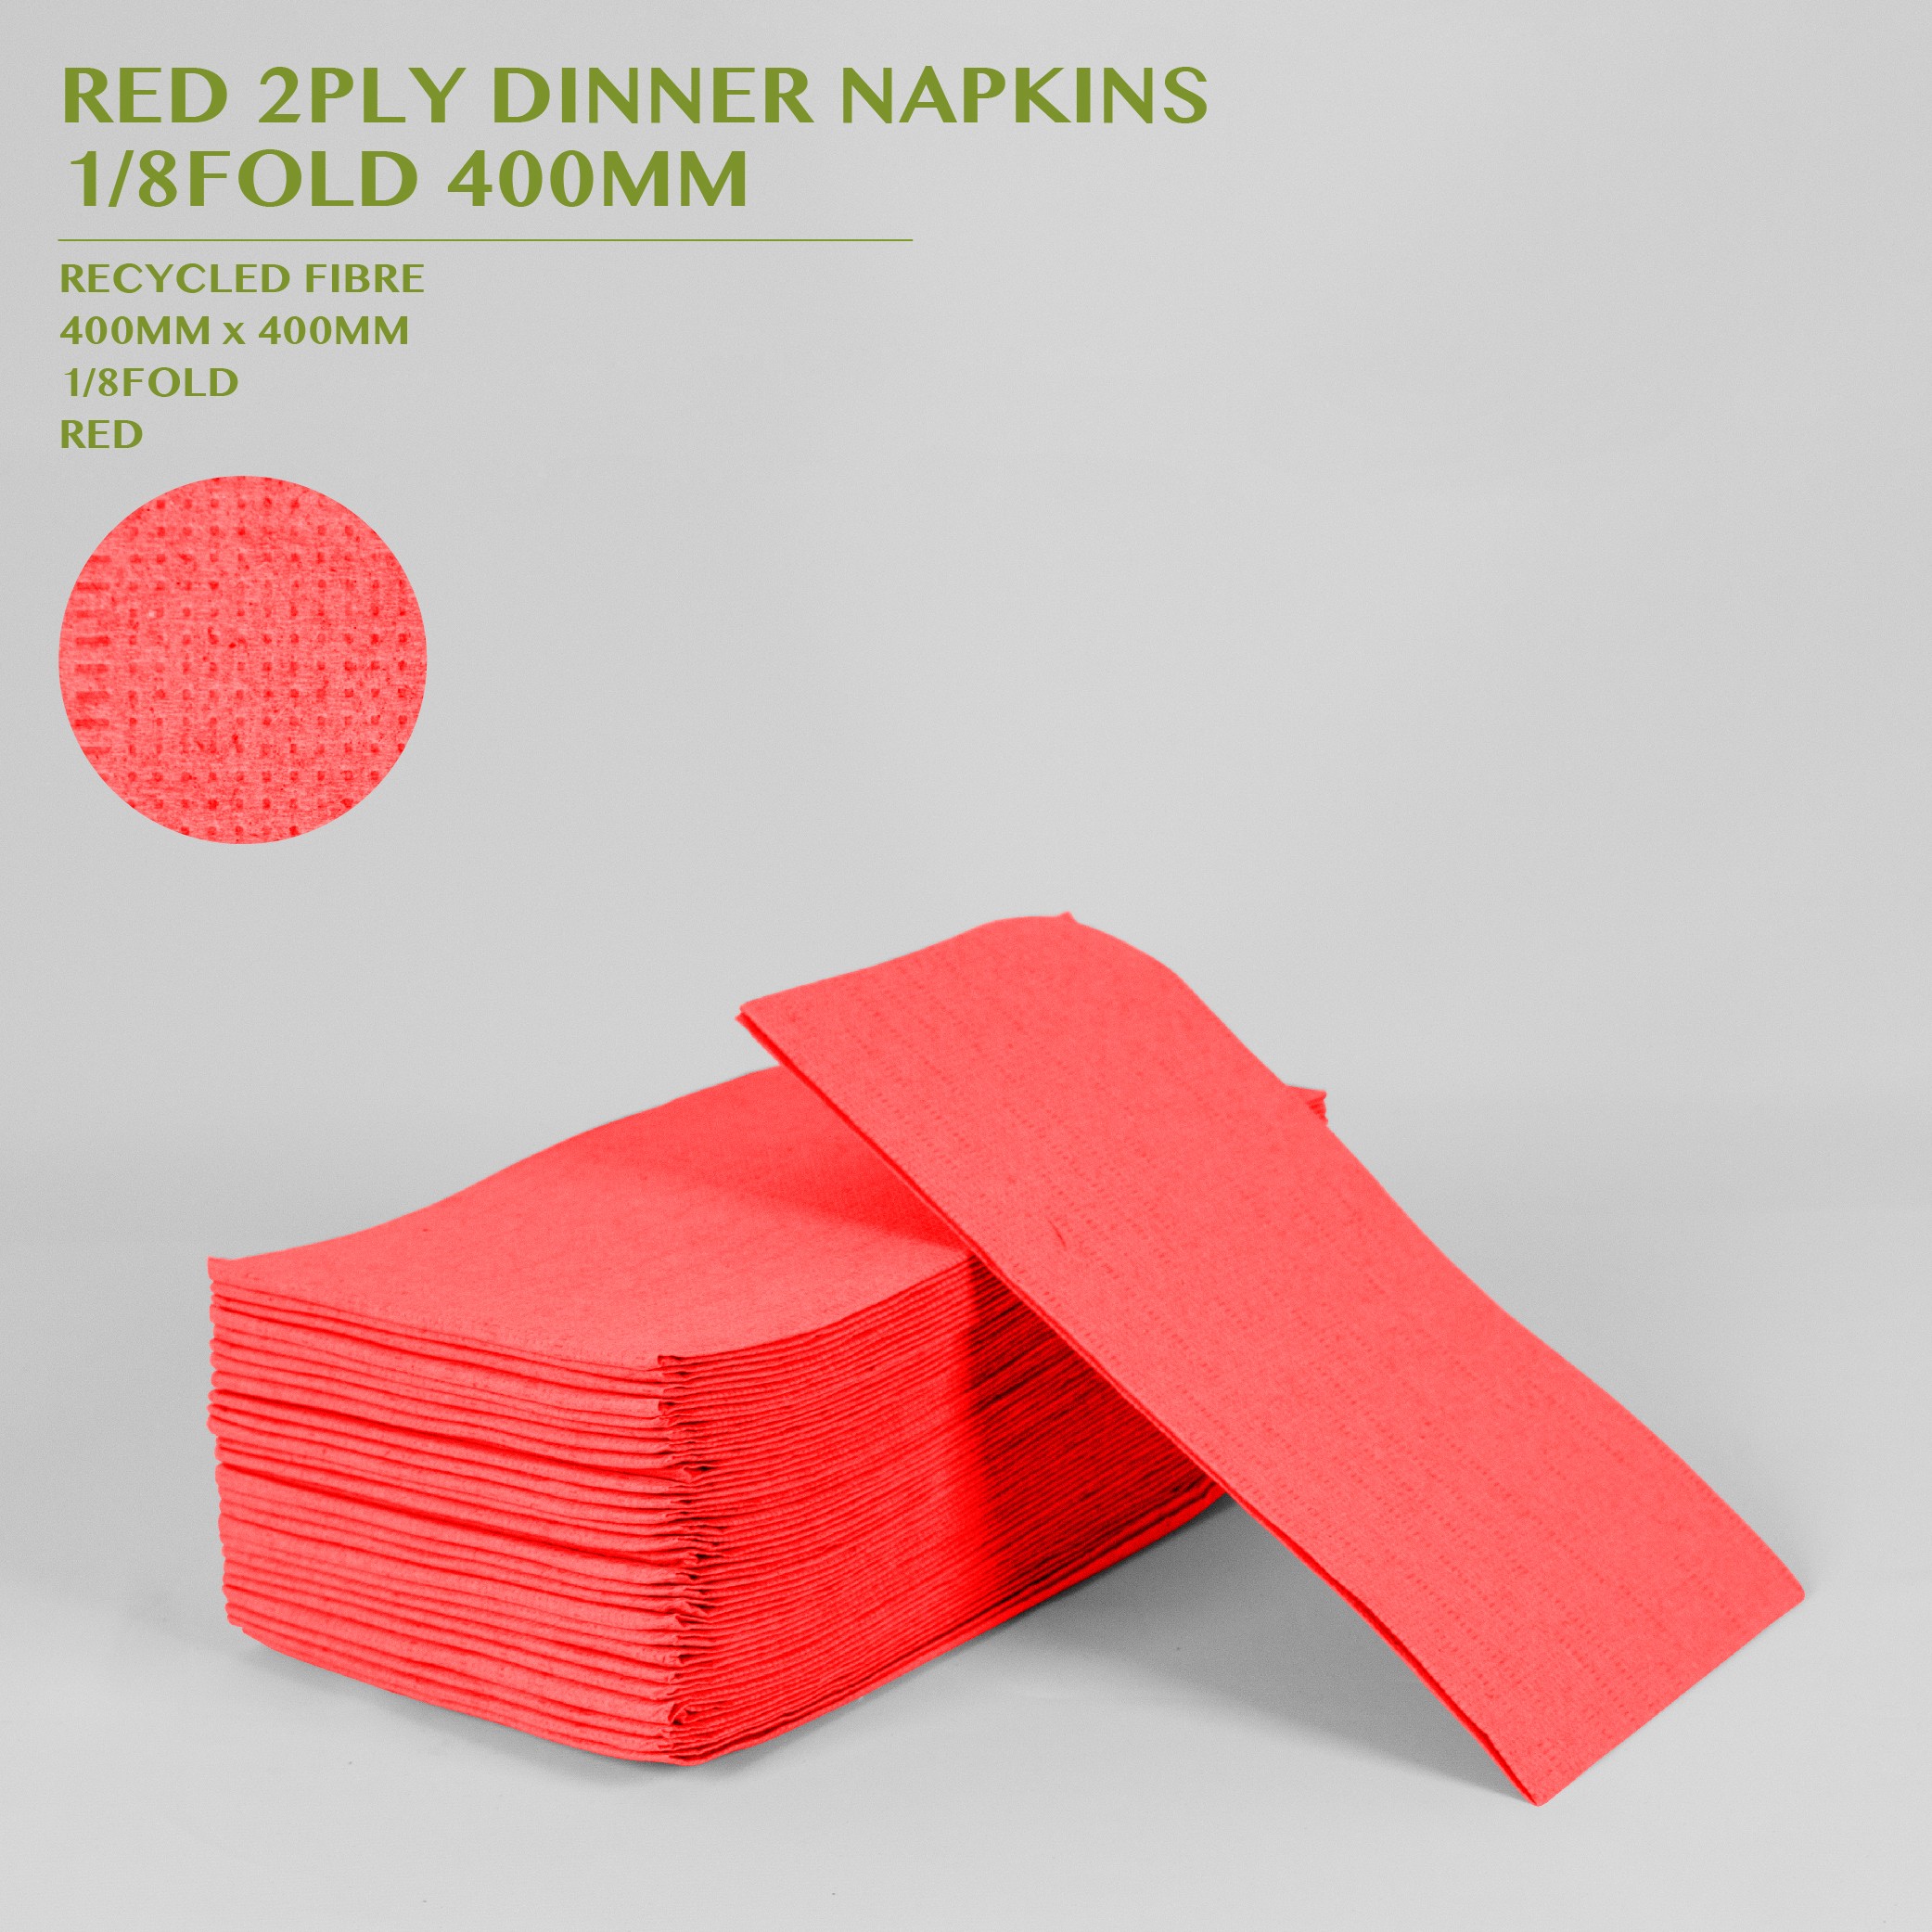 PRE-ORDER RED 2PLY DINNER NAPKINS  1/8FOLD 400MM 100PACK